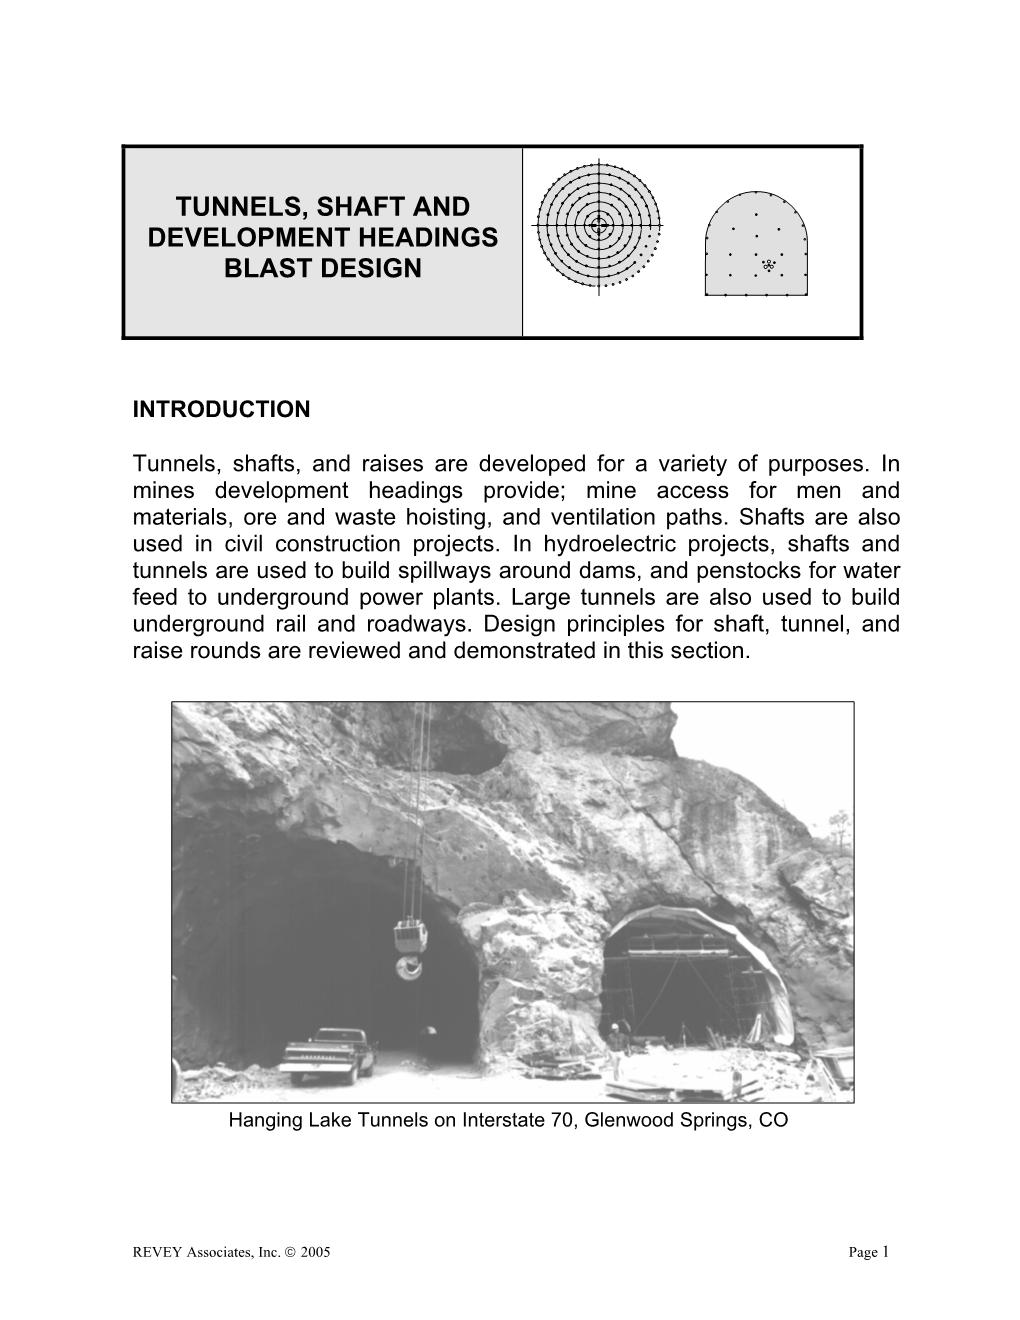 Tunnels, Shaft and Development Headings Blast Design